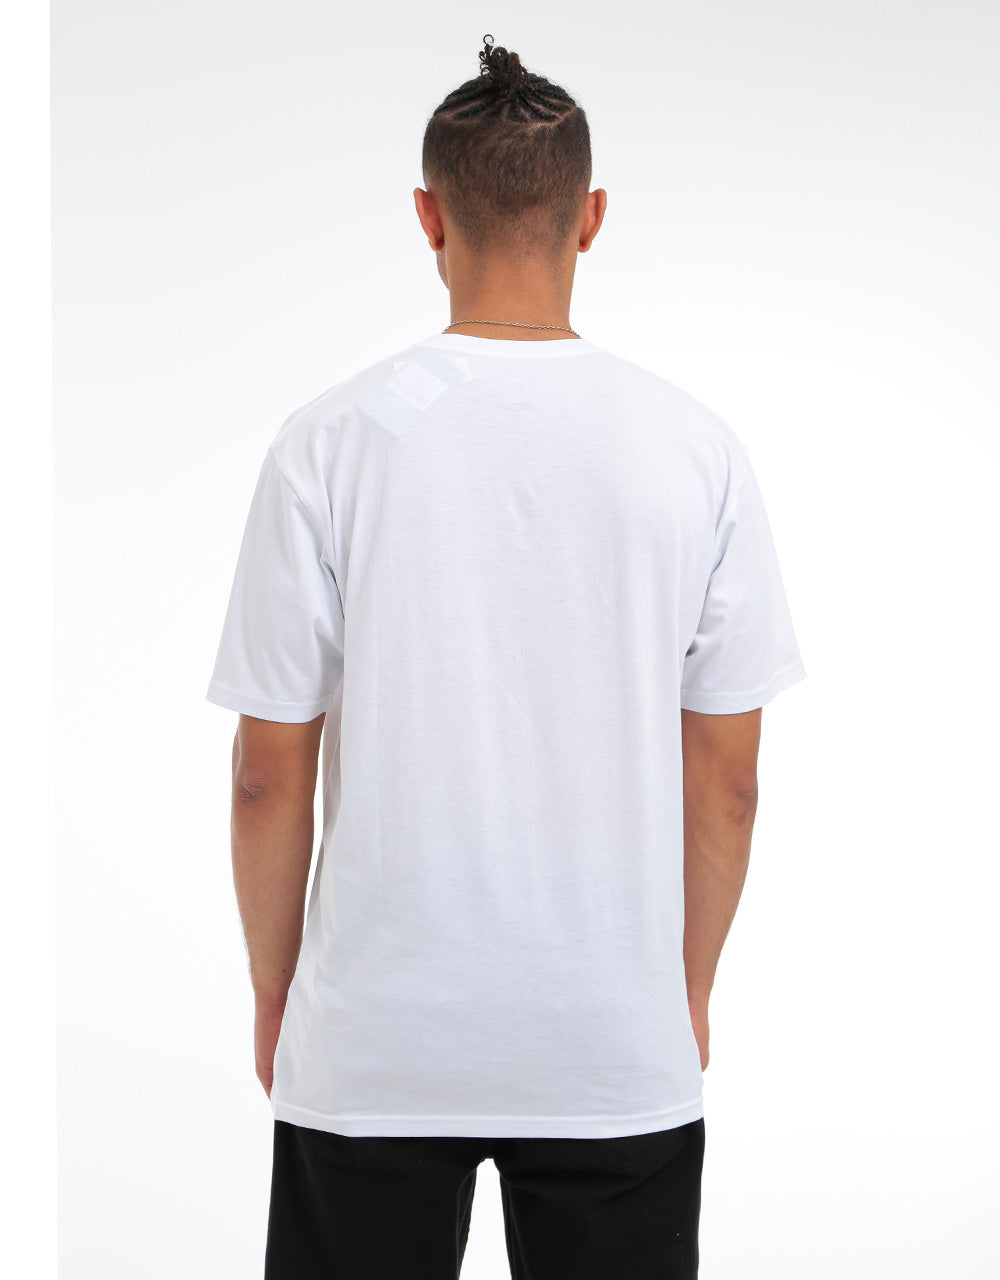 Vans x Shake Junt Logo T-Shirt - White